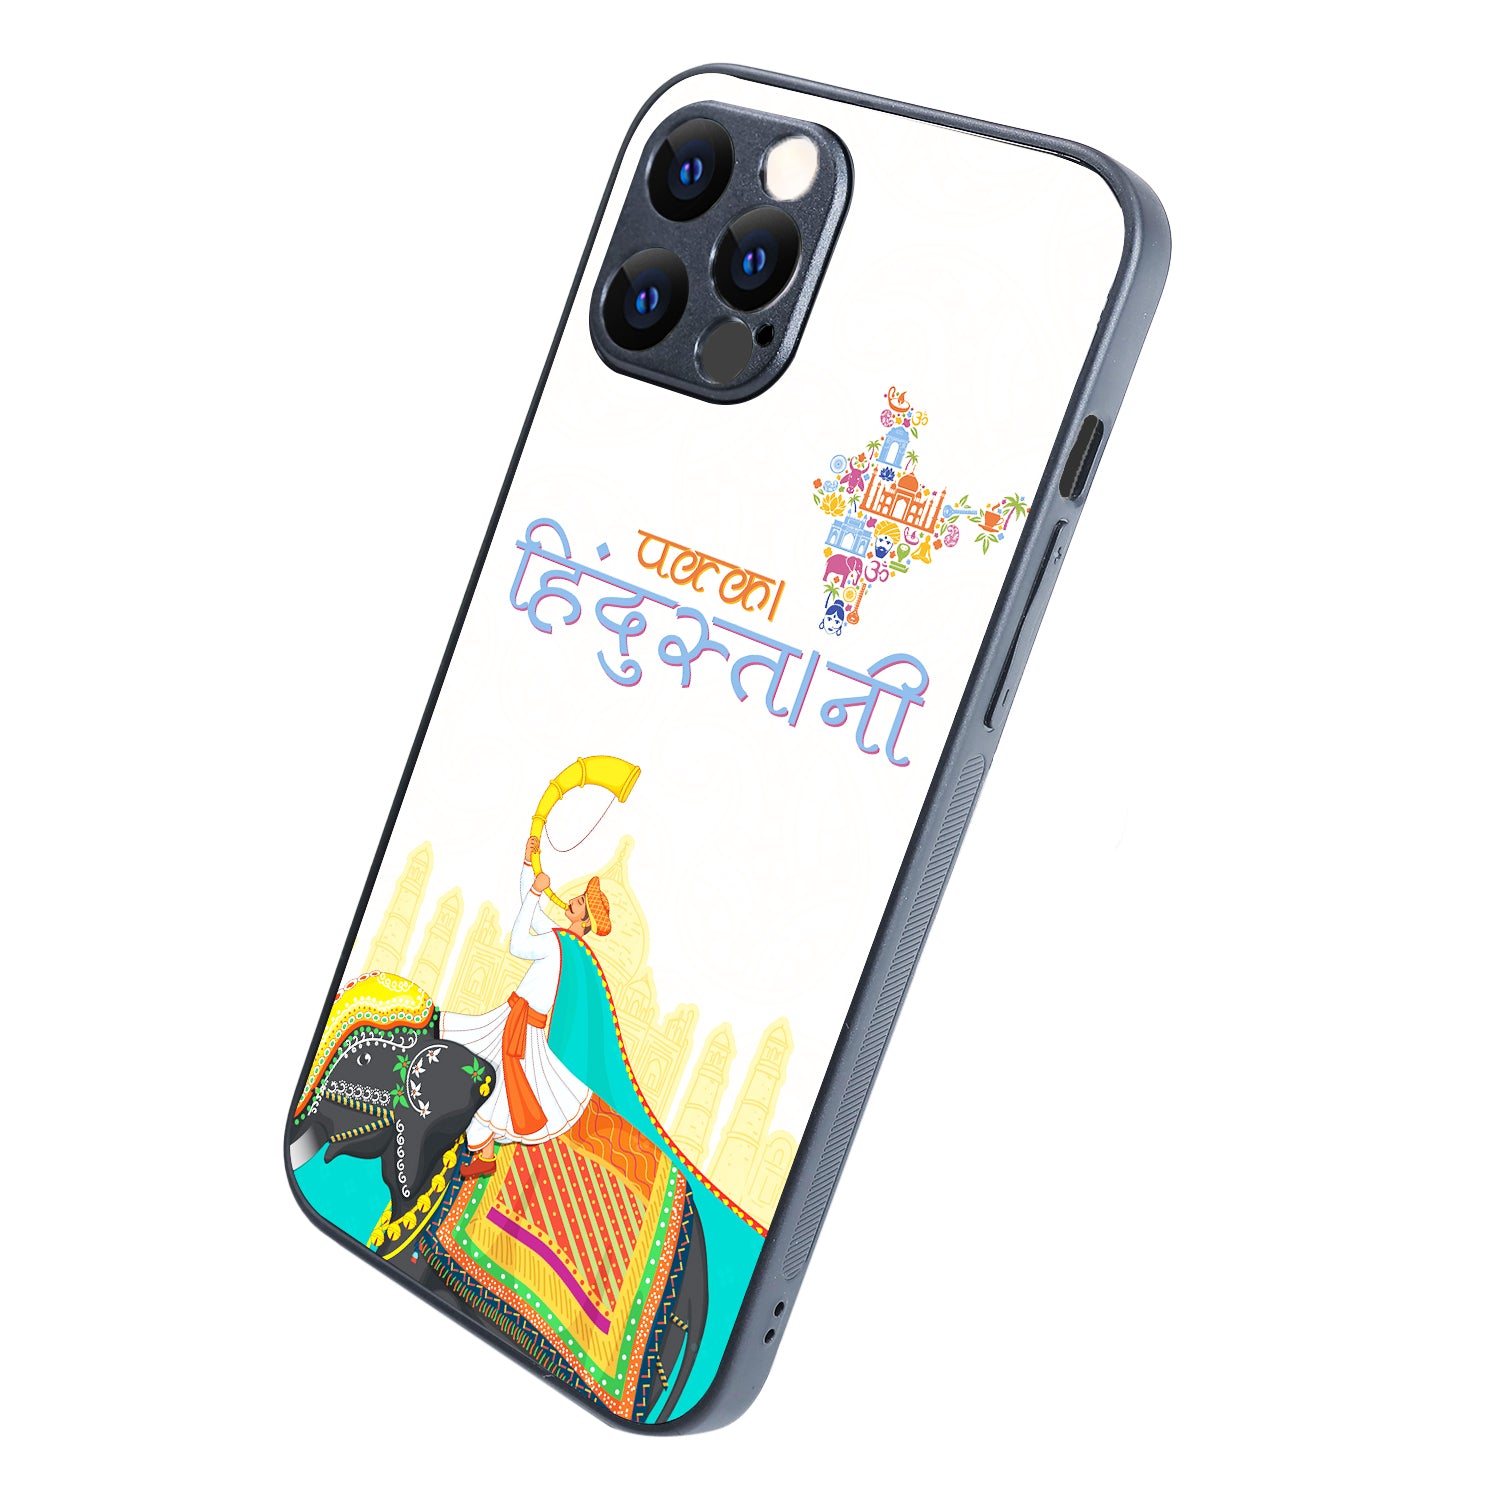 Pakka Hindustani Indian iPhone 12 Pro Max Case